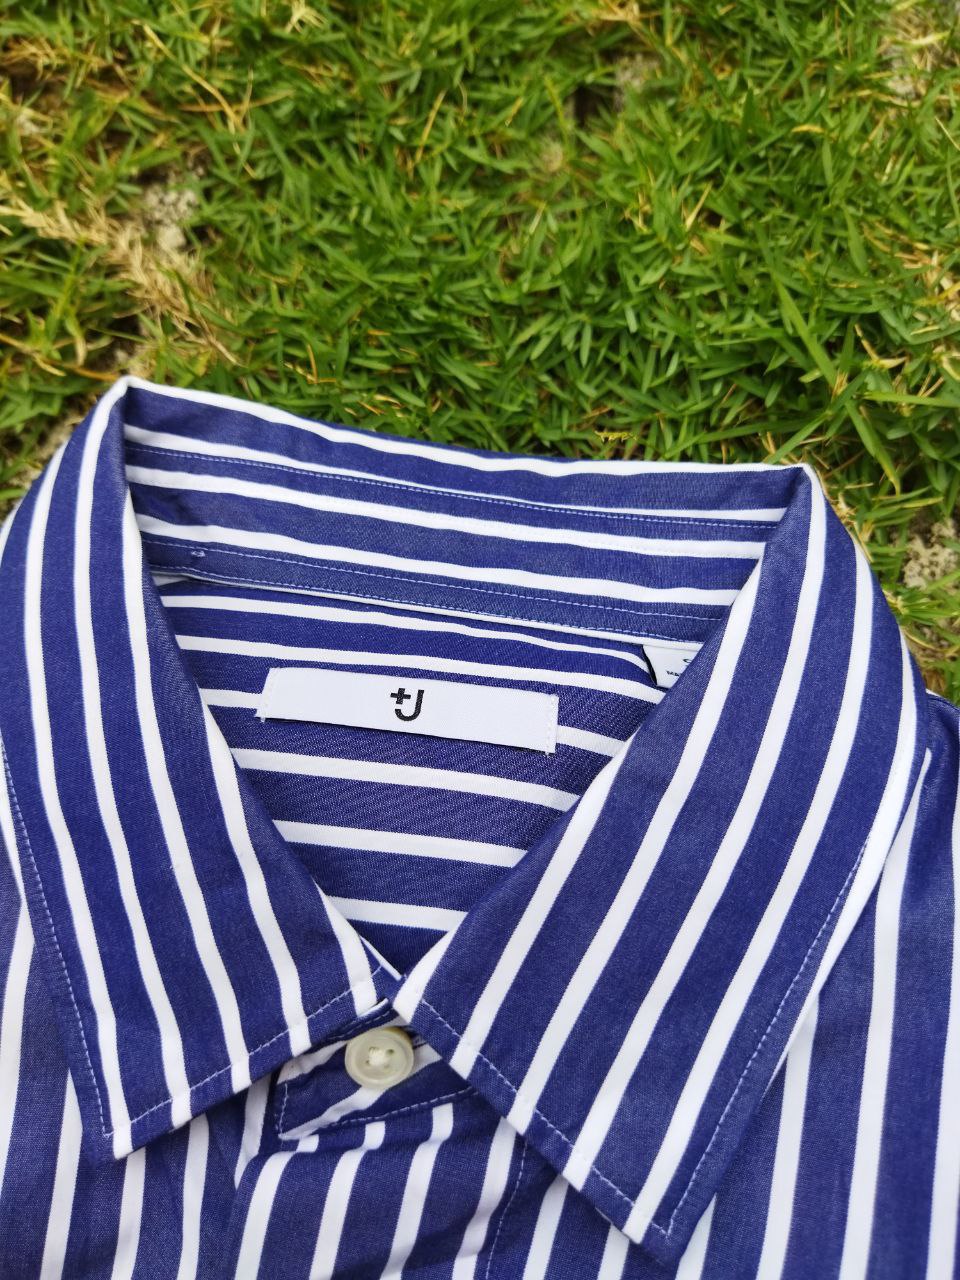 Jil Sander X Ut +J Oversized Striped Shirt - 4